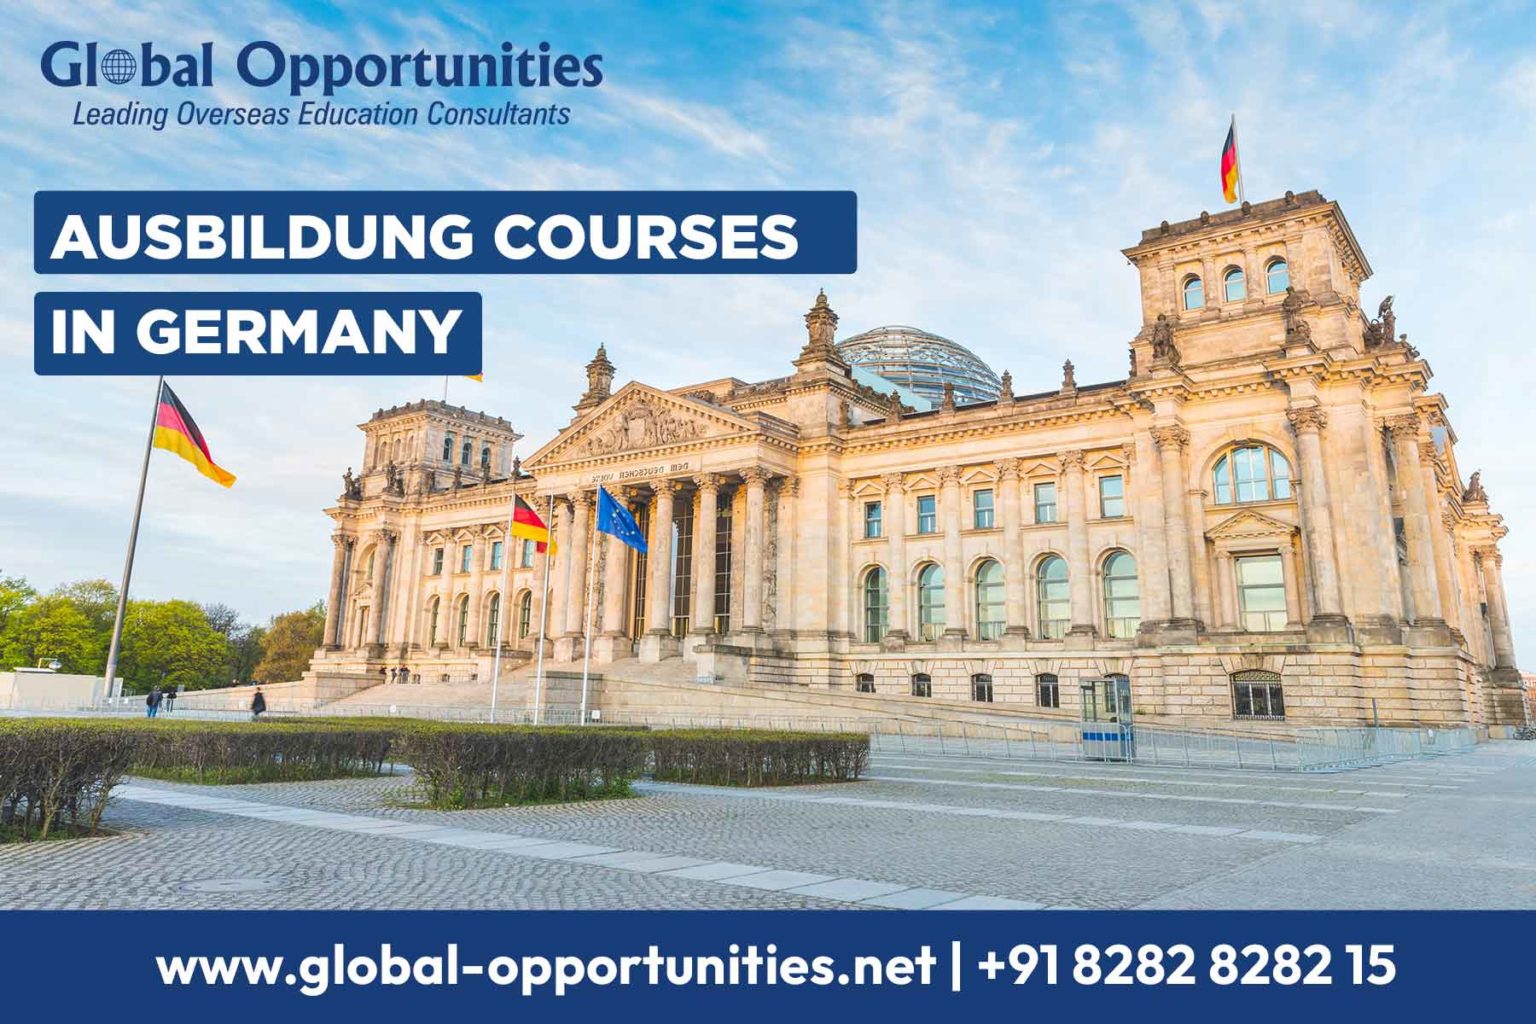 Ausbildung Courses In Germany 1536x1024 